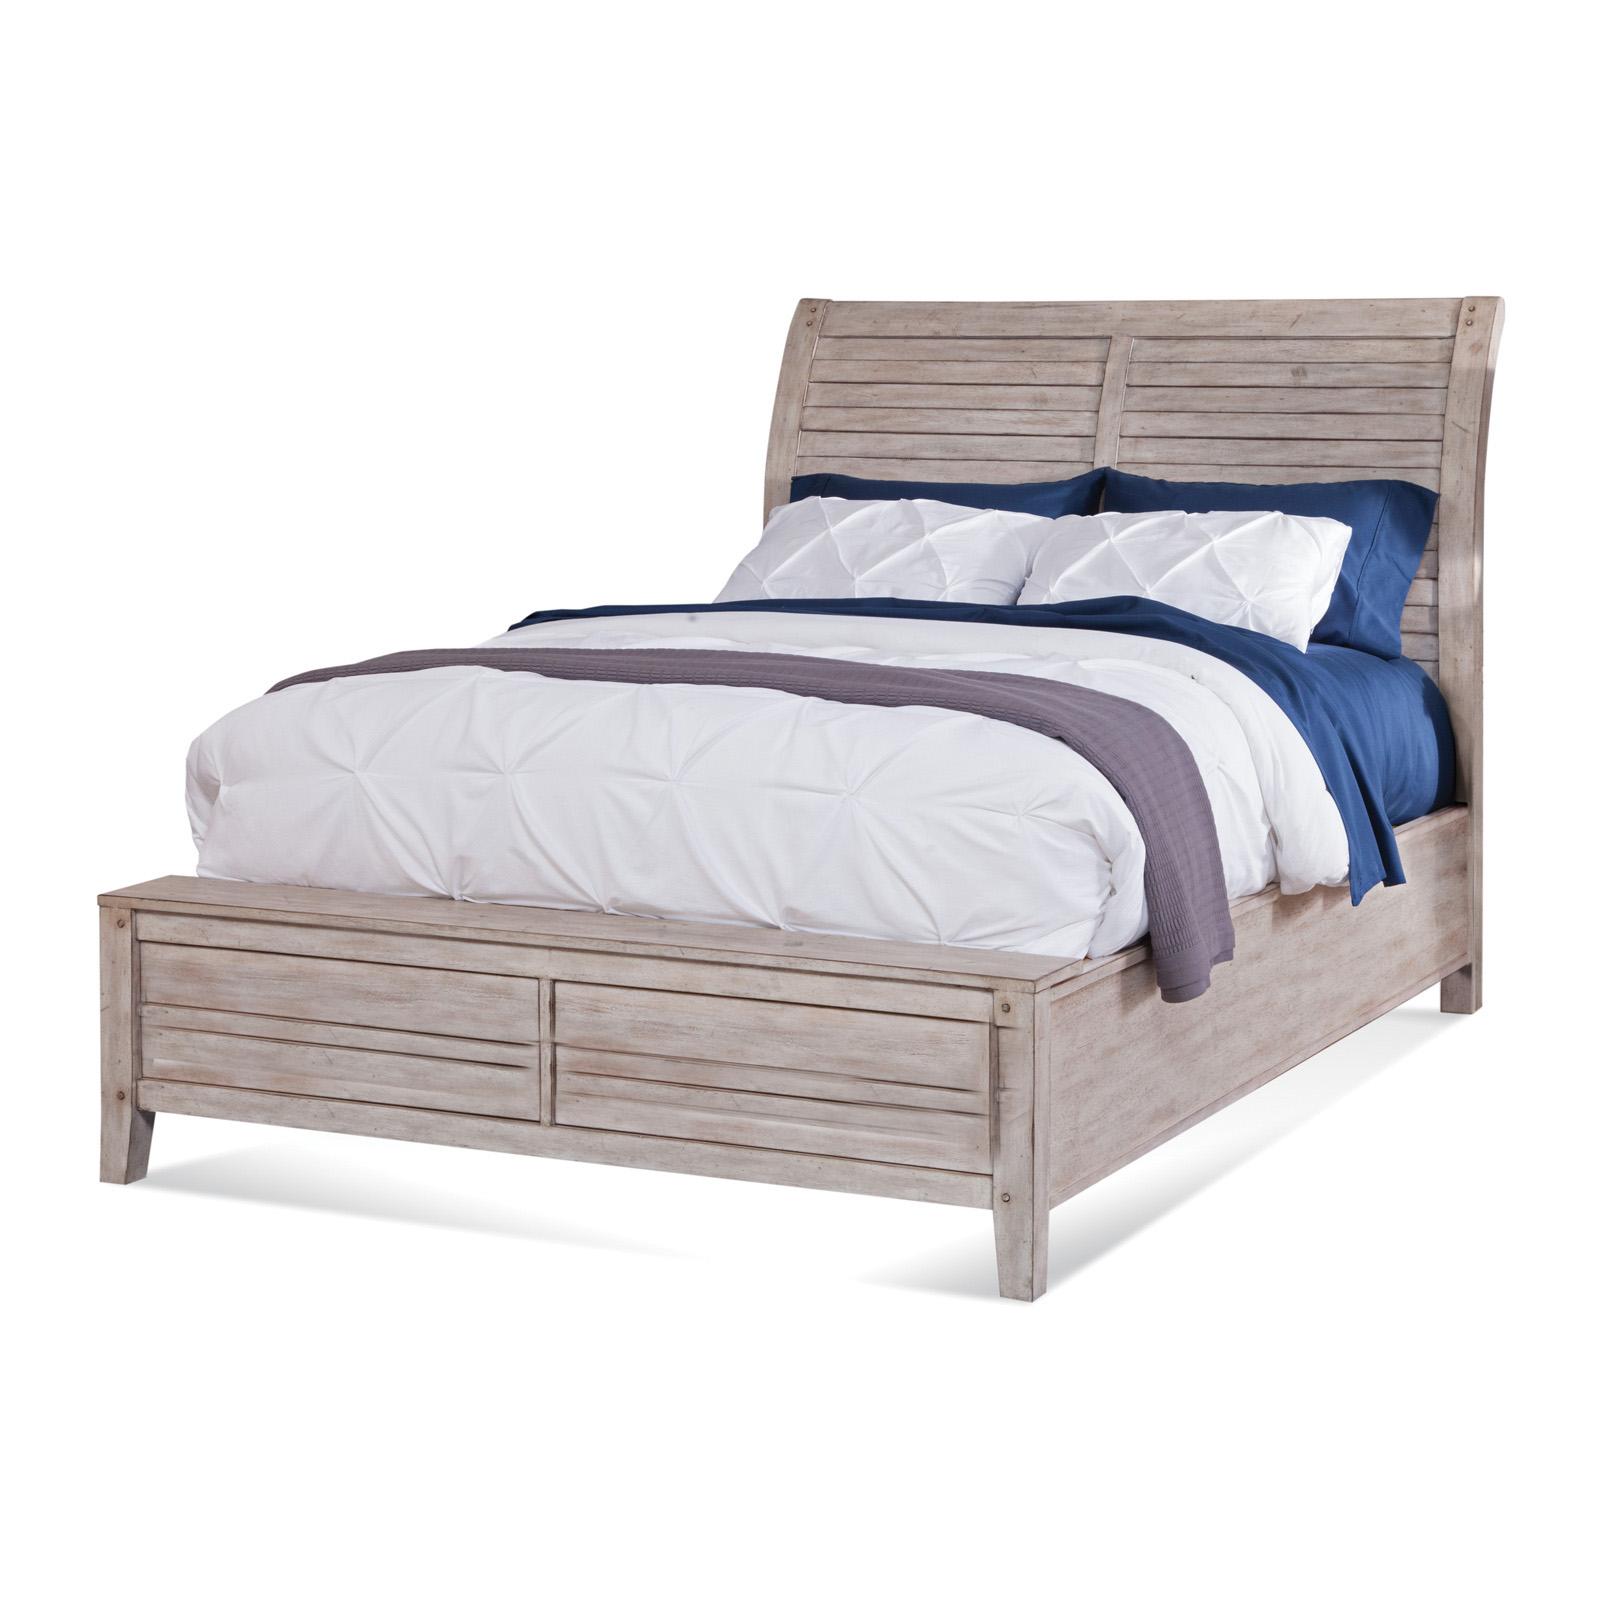 Classic, Traditional Sleigh Bed AURORA 2810-66SLP 2810-66SLPN in whitewash 